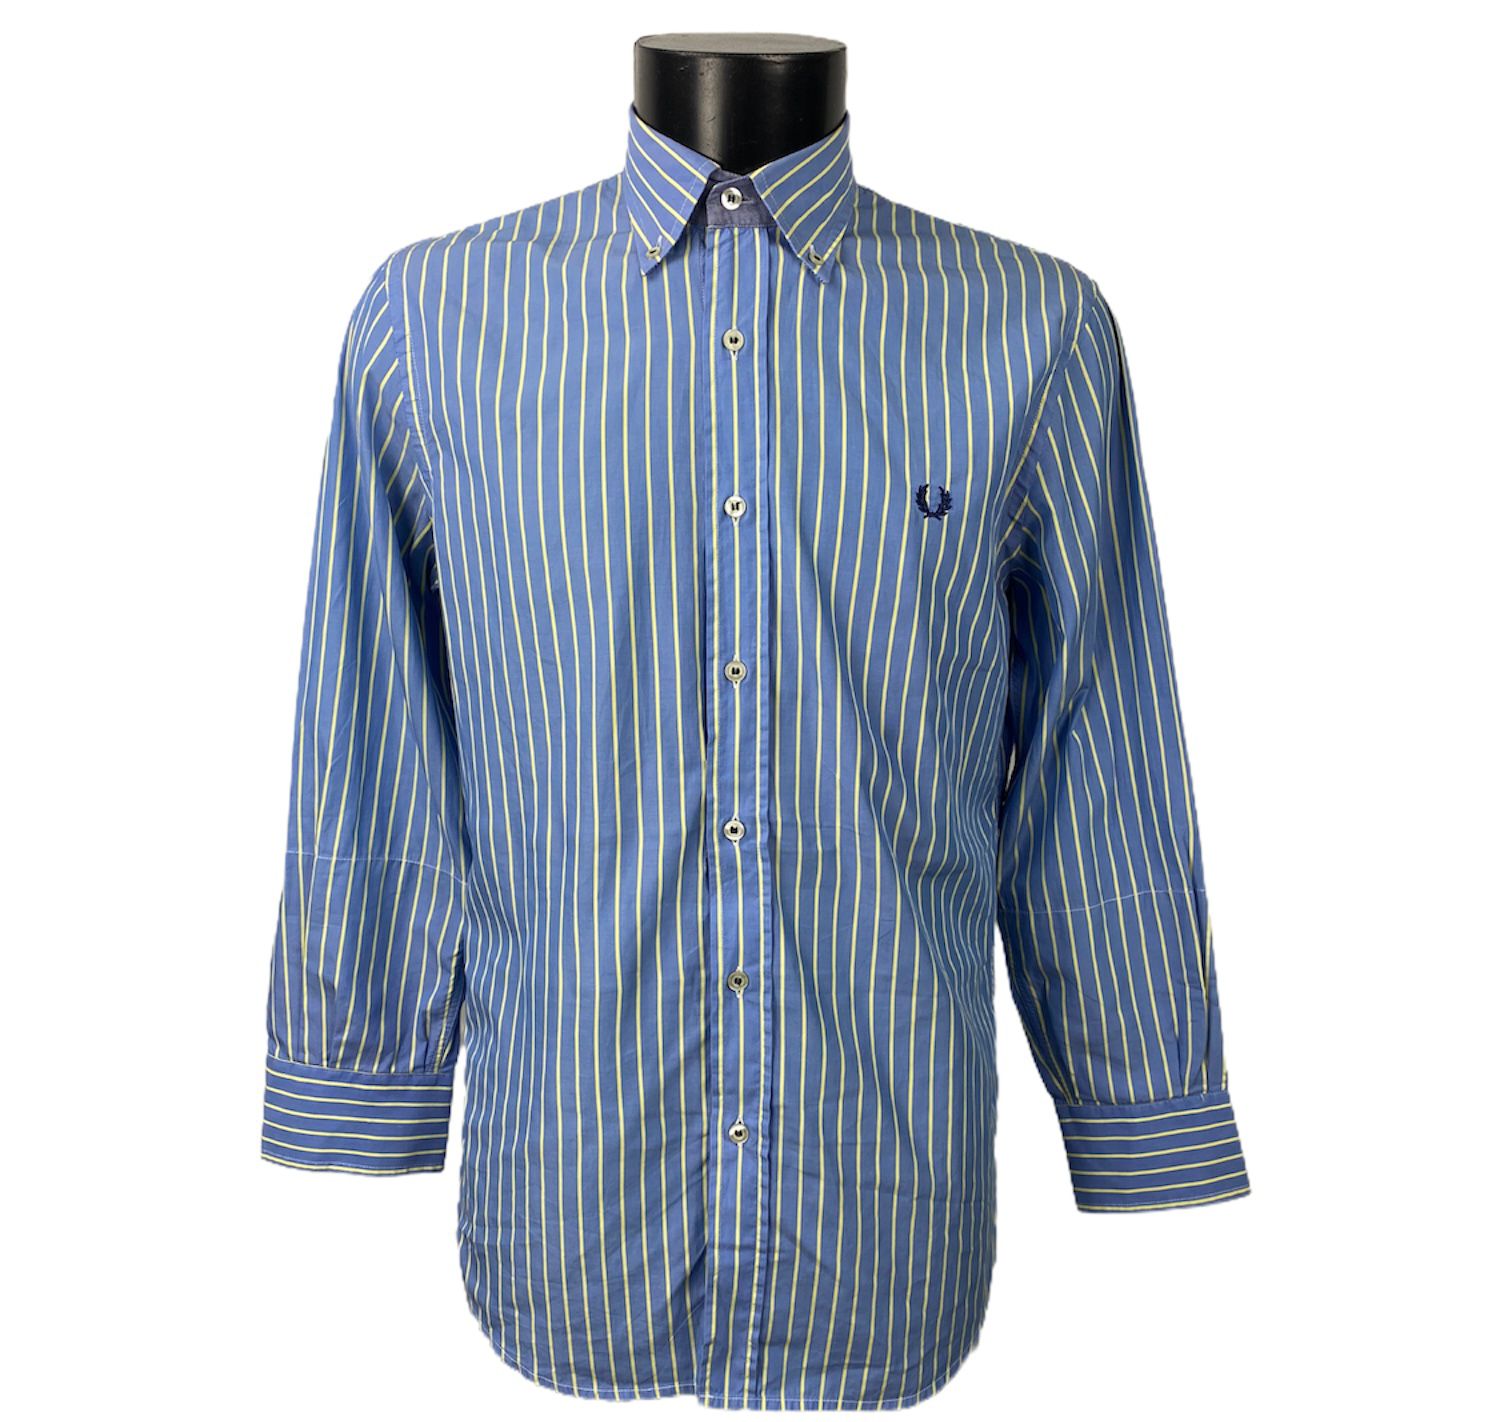 Camicia vintage firmata a maniche lunghe a righe strette verticali bianche e azzurre da uomo